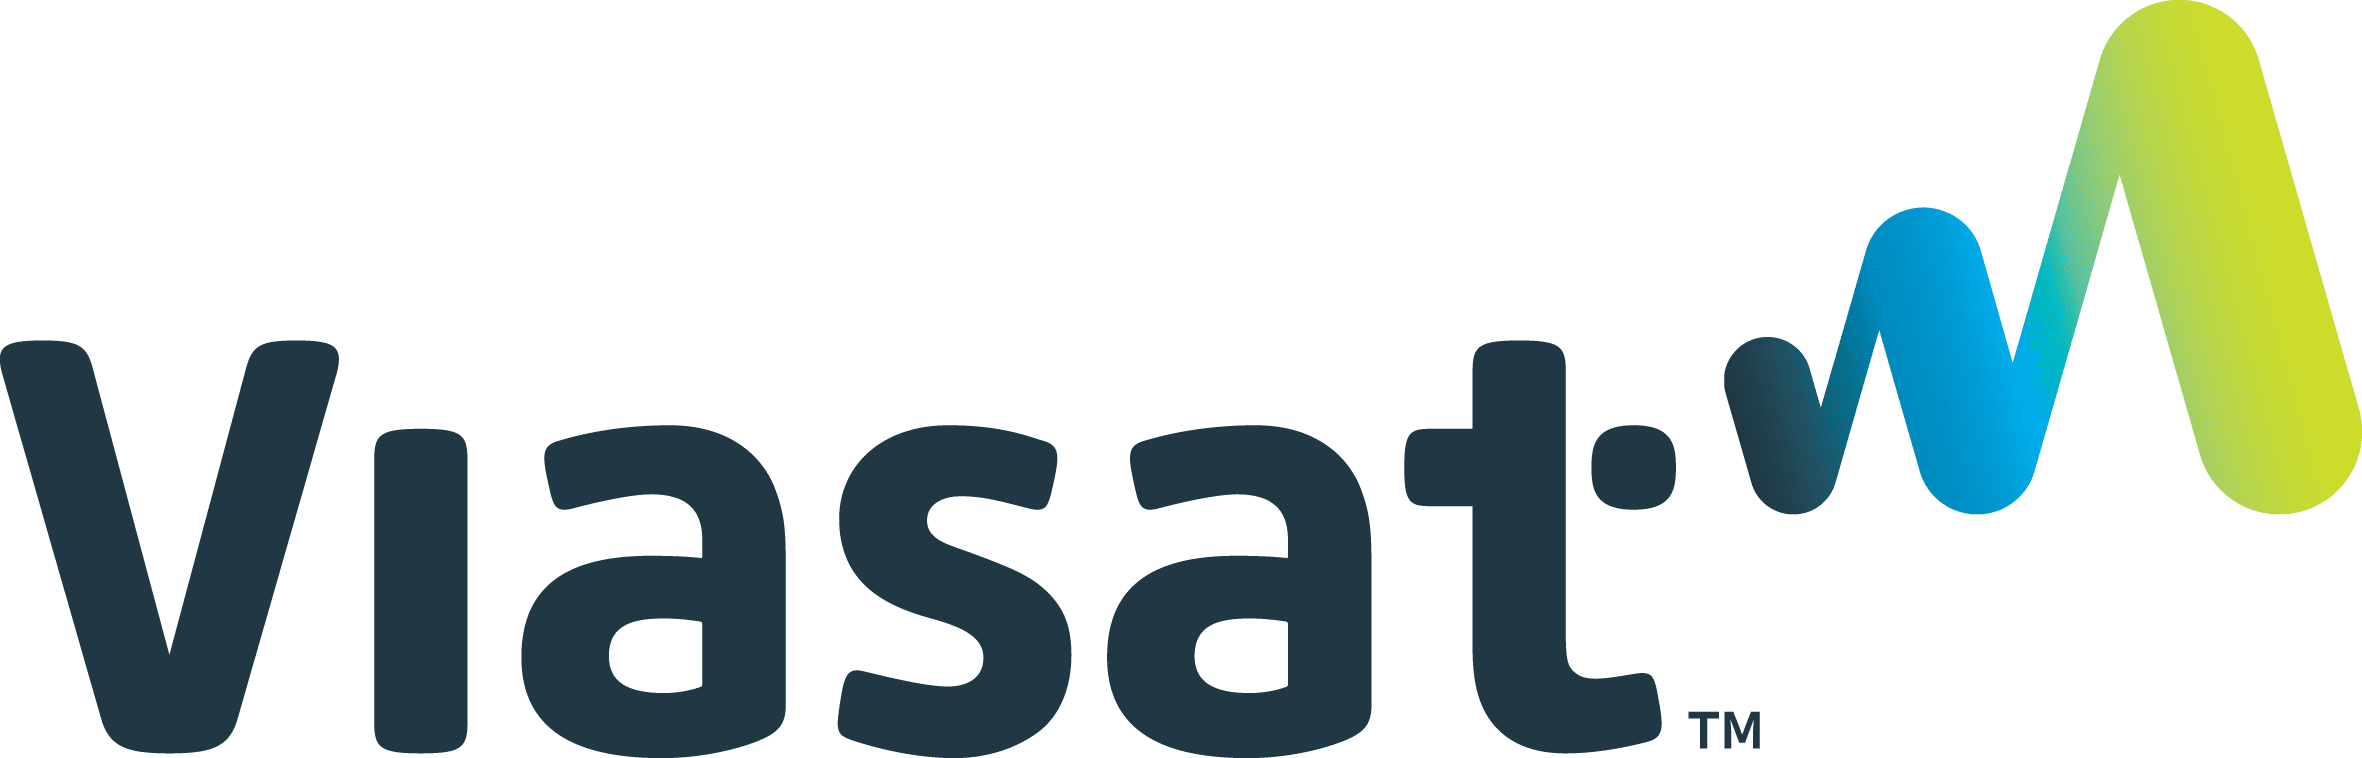 Logo - Carrier - ViaSat